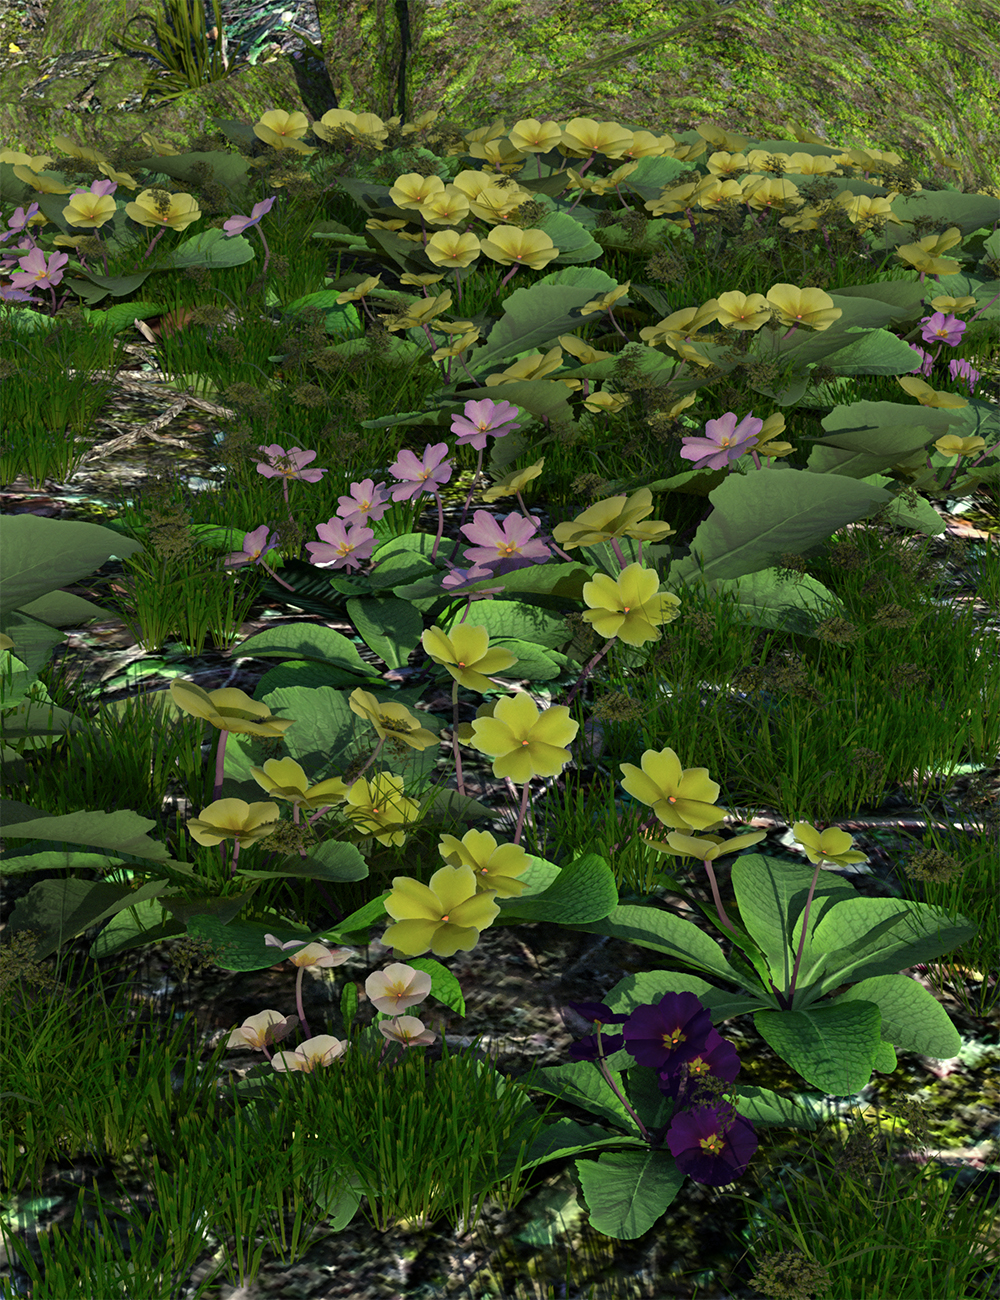 Wild Flowers Vol 8 - Wild Primrose by: MartinJFrost, 3D Models by Daz 3D